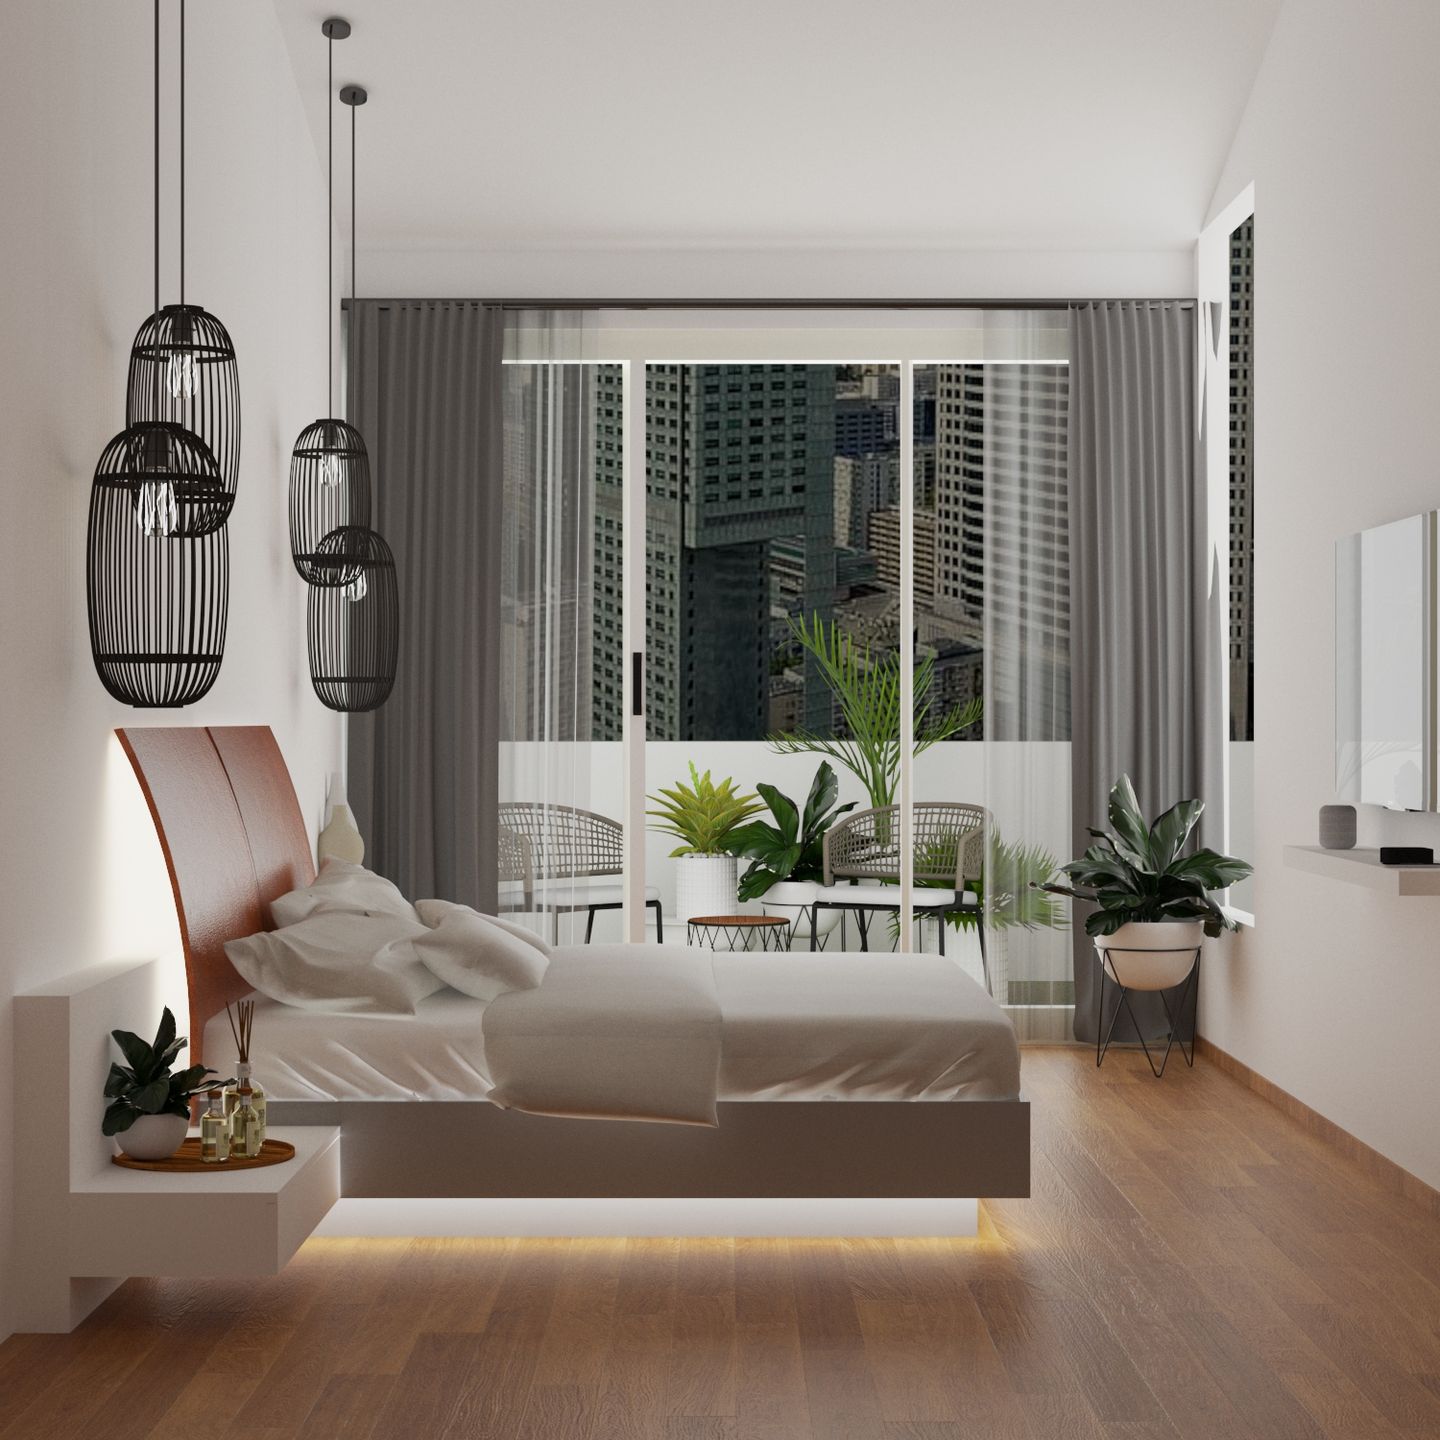 Bedroom Interior Design with Dark Wooden Flooring and Cage Lights - Livspace